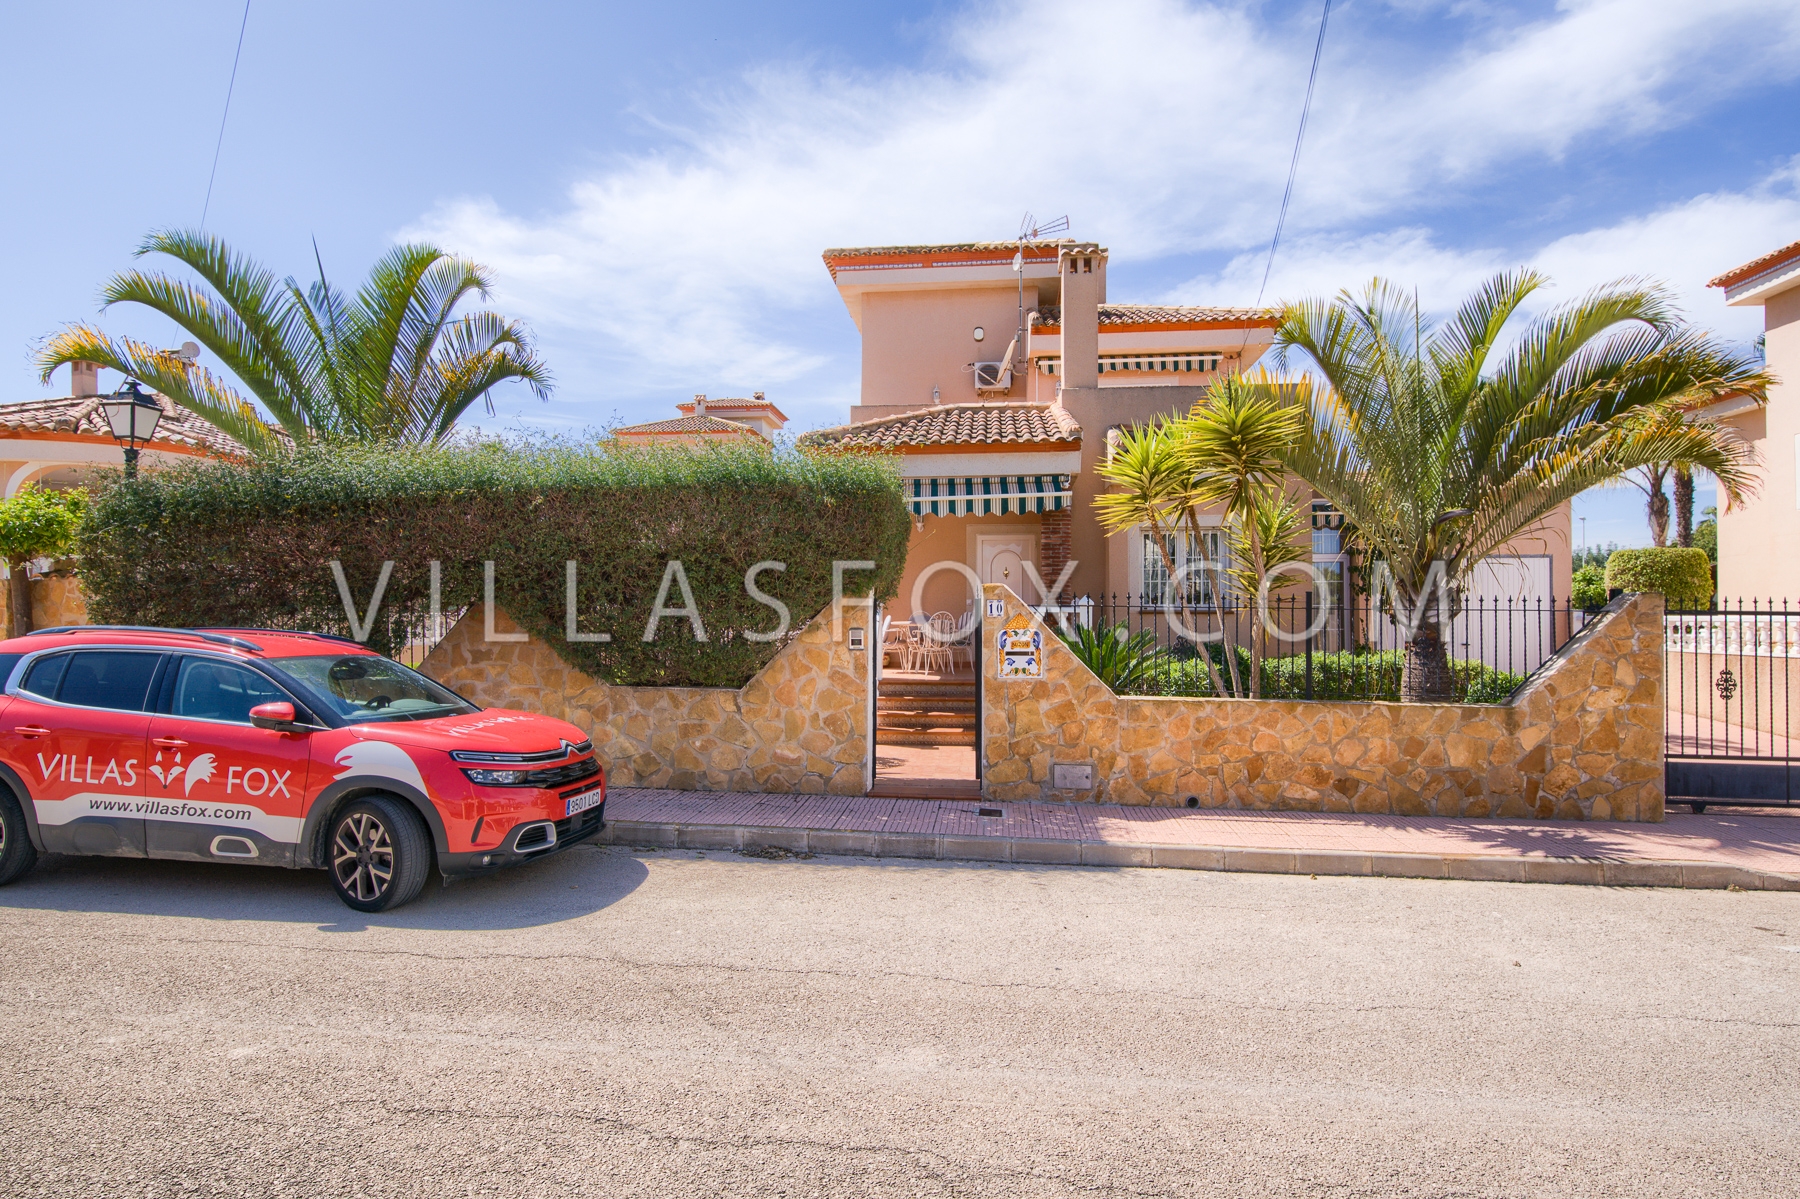 Villa Torrestrella para venda, 3 quartos, piscina privada, garagem